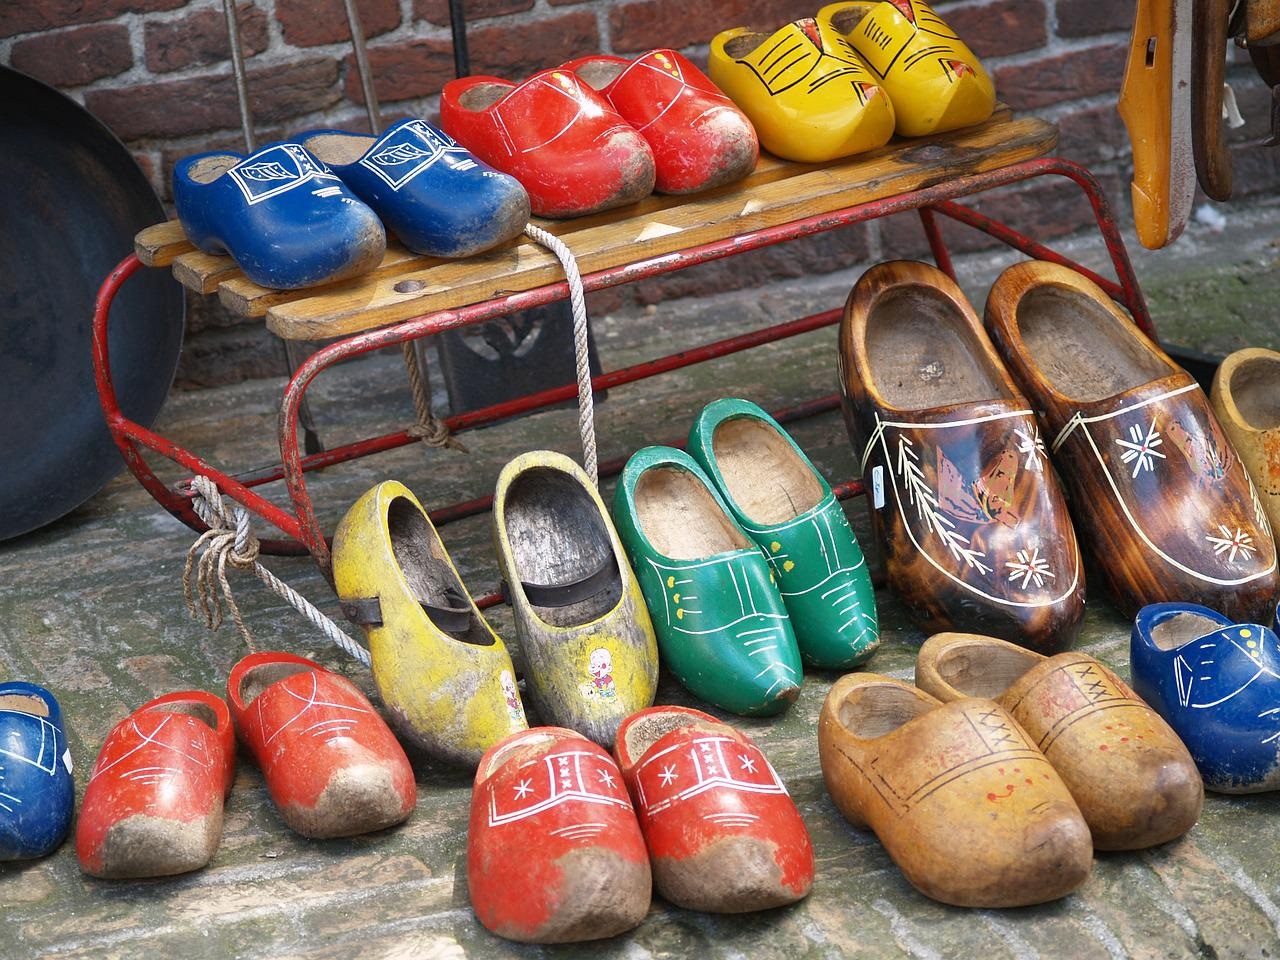 Traditionele schoenen